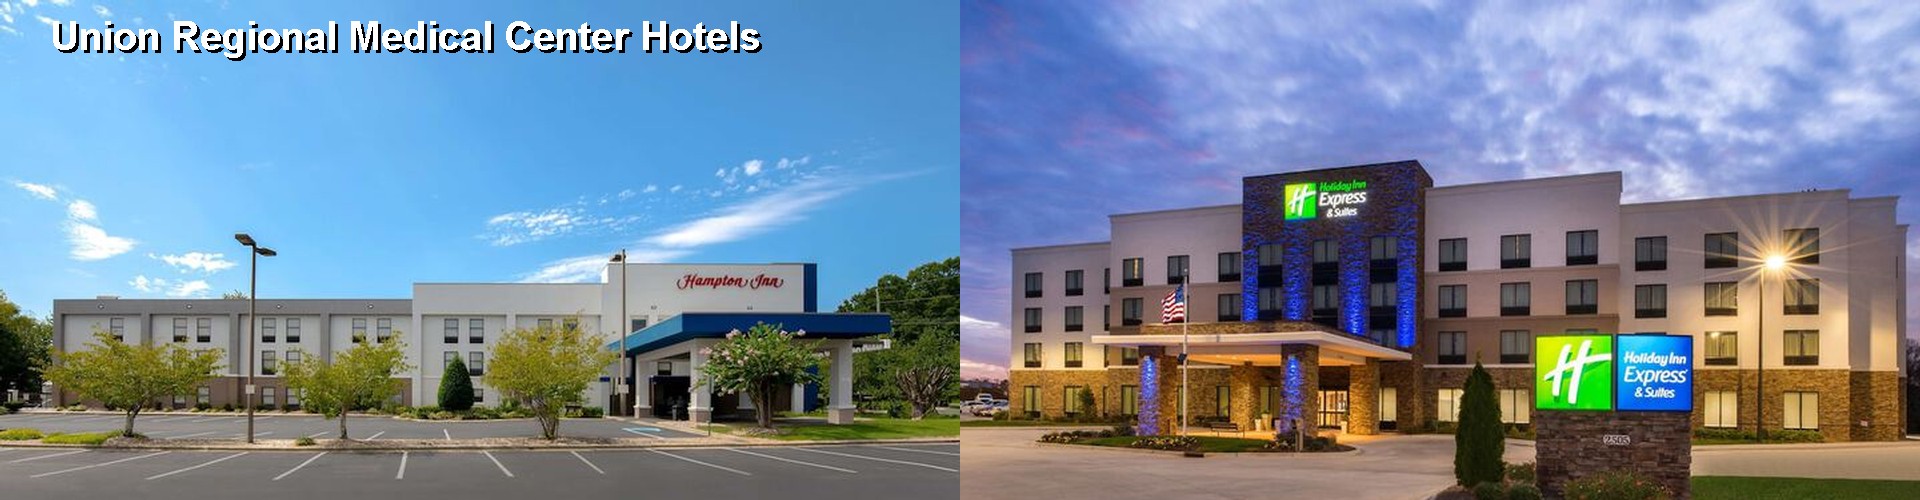 5 Best Hotels near Union Regional Medical Center